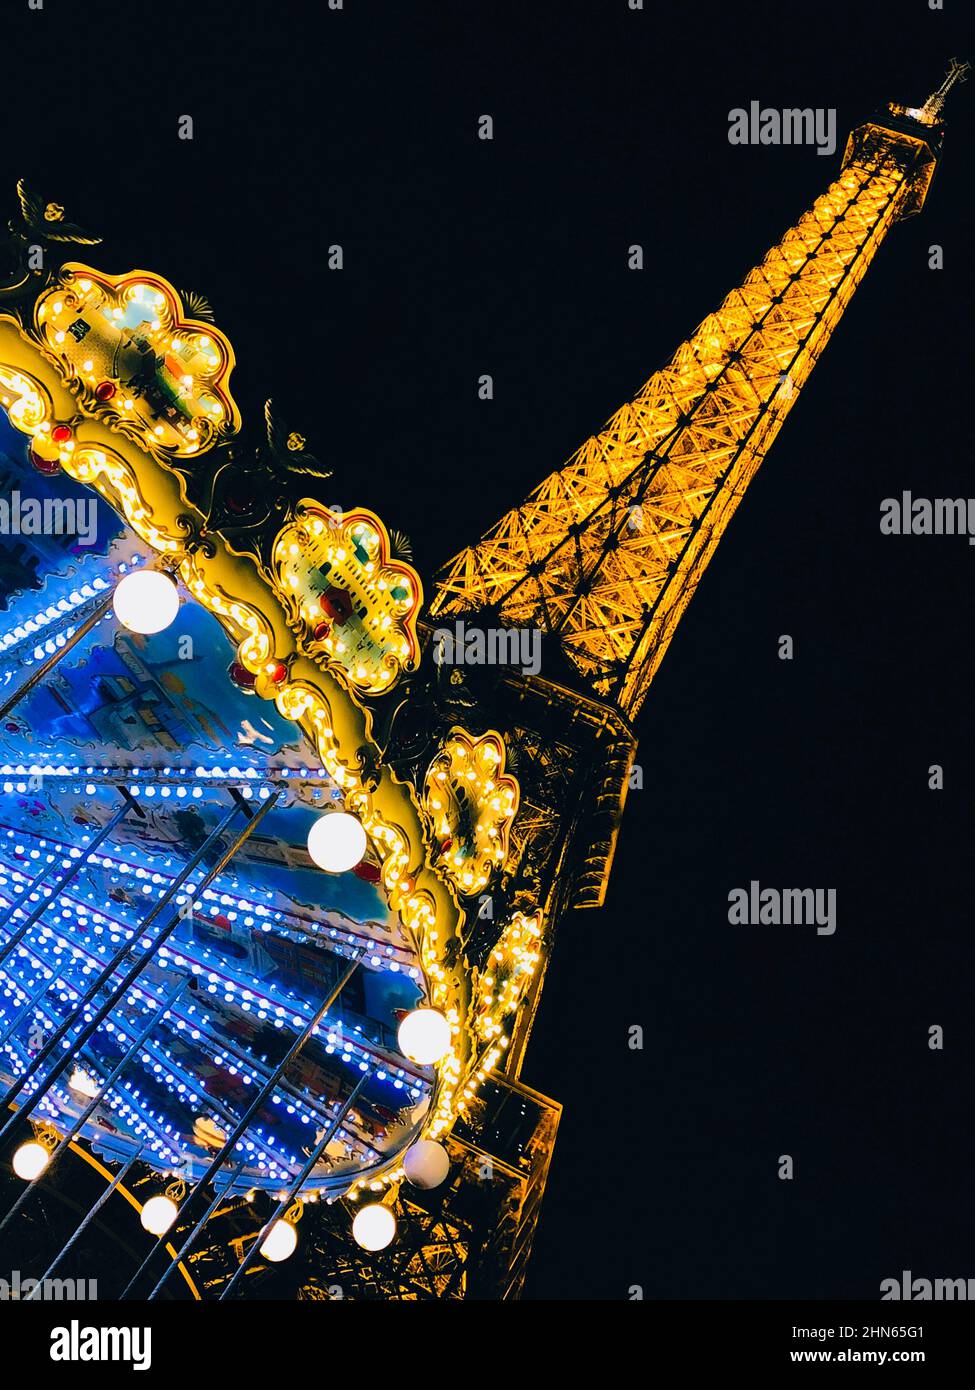 Under the Paris sky Stock Photo